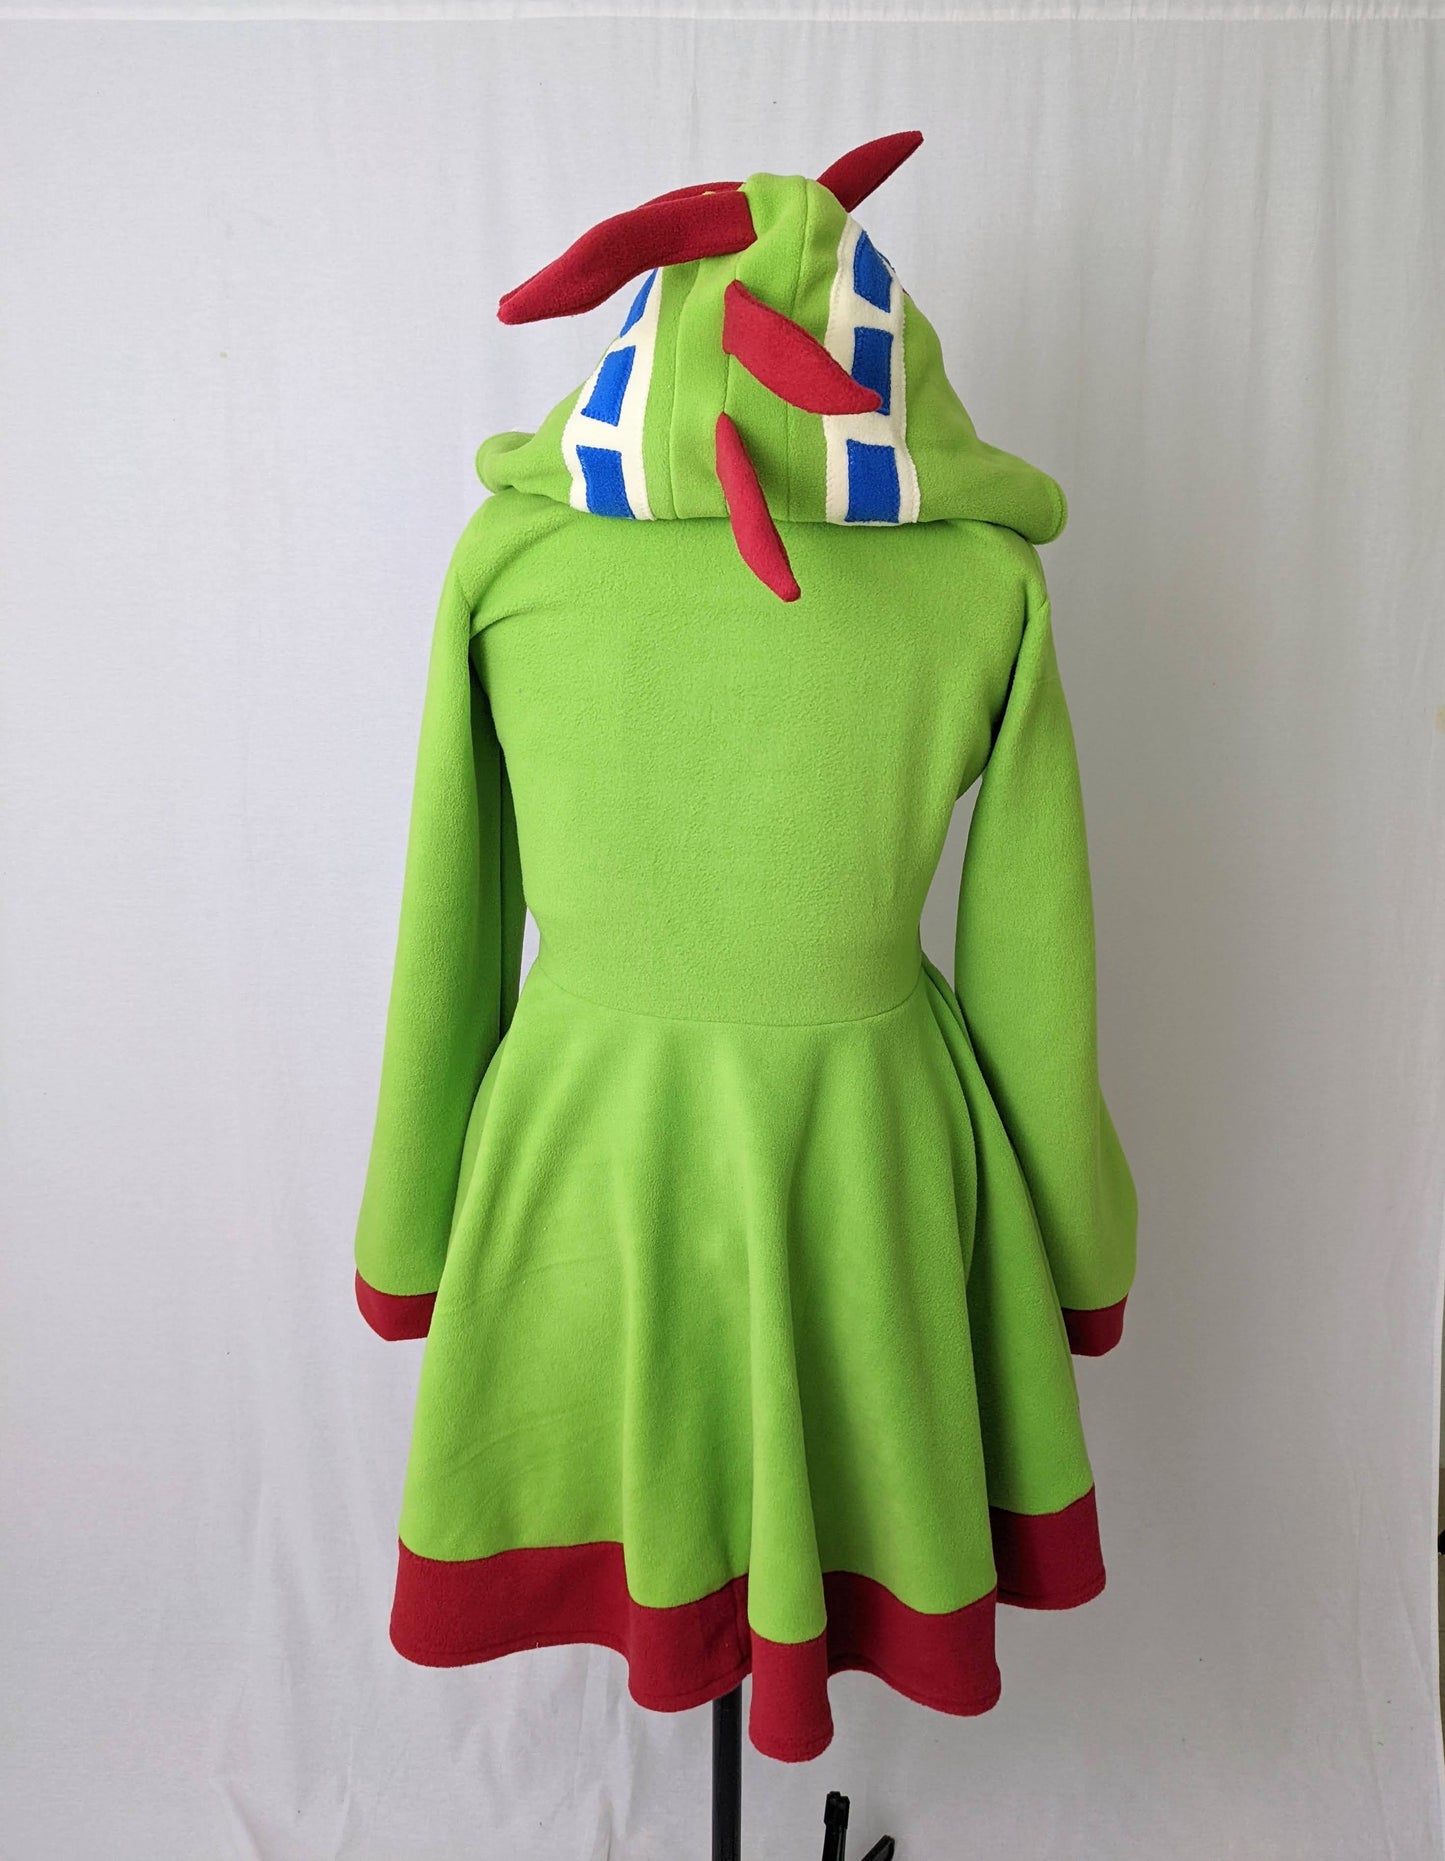 Murloc Inspired Kigurumi Dress